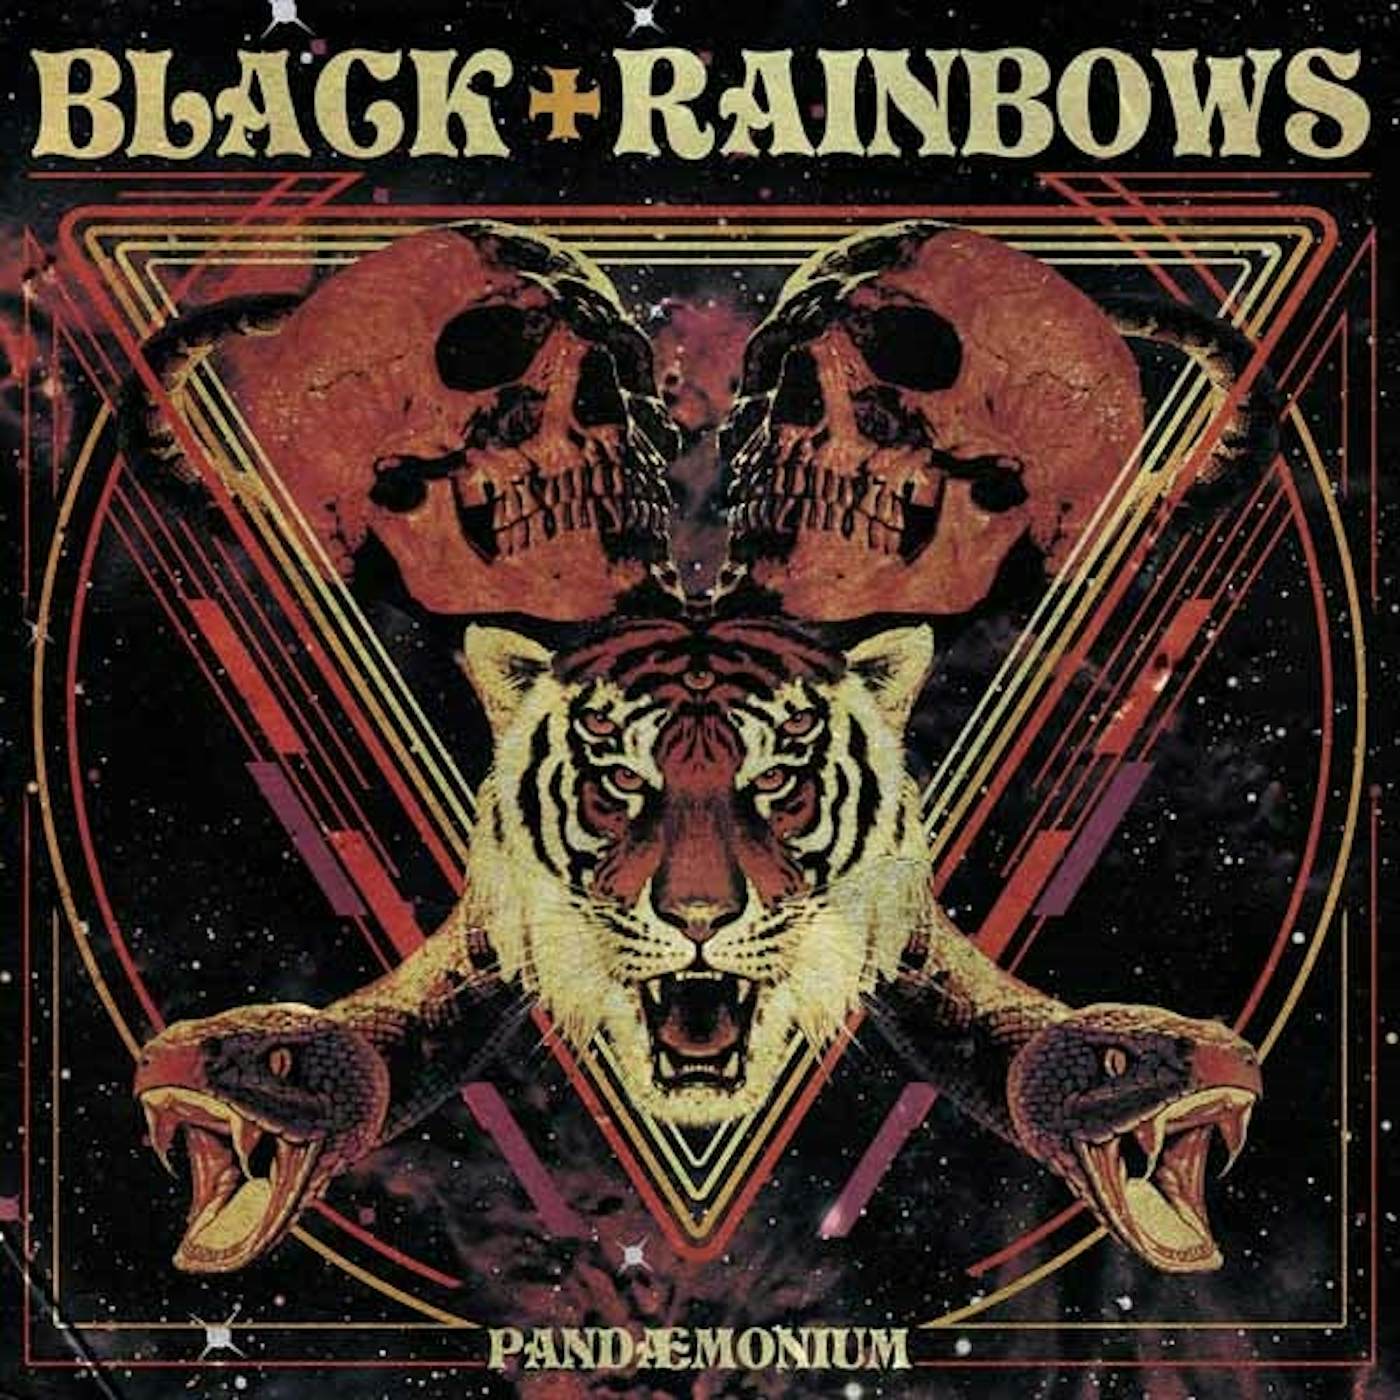 Black Rainbows LP - Pandaemonium (Vinyl)